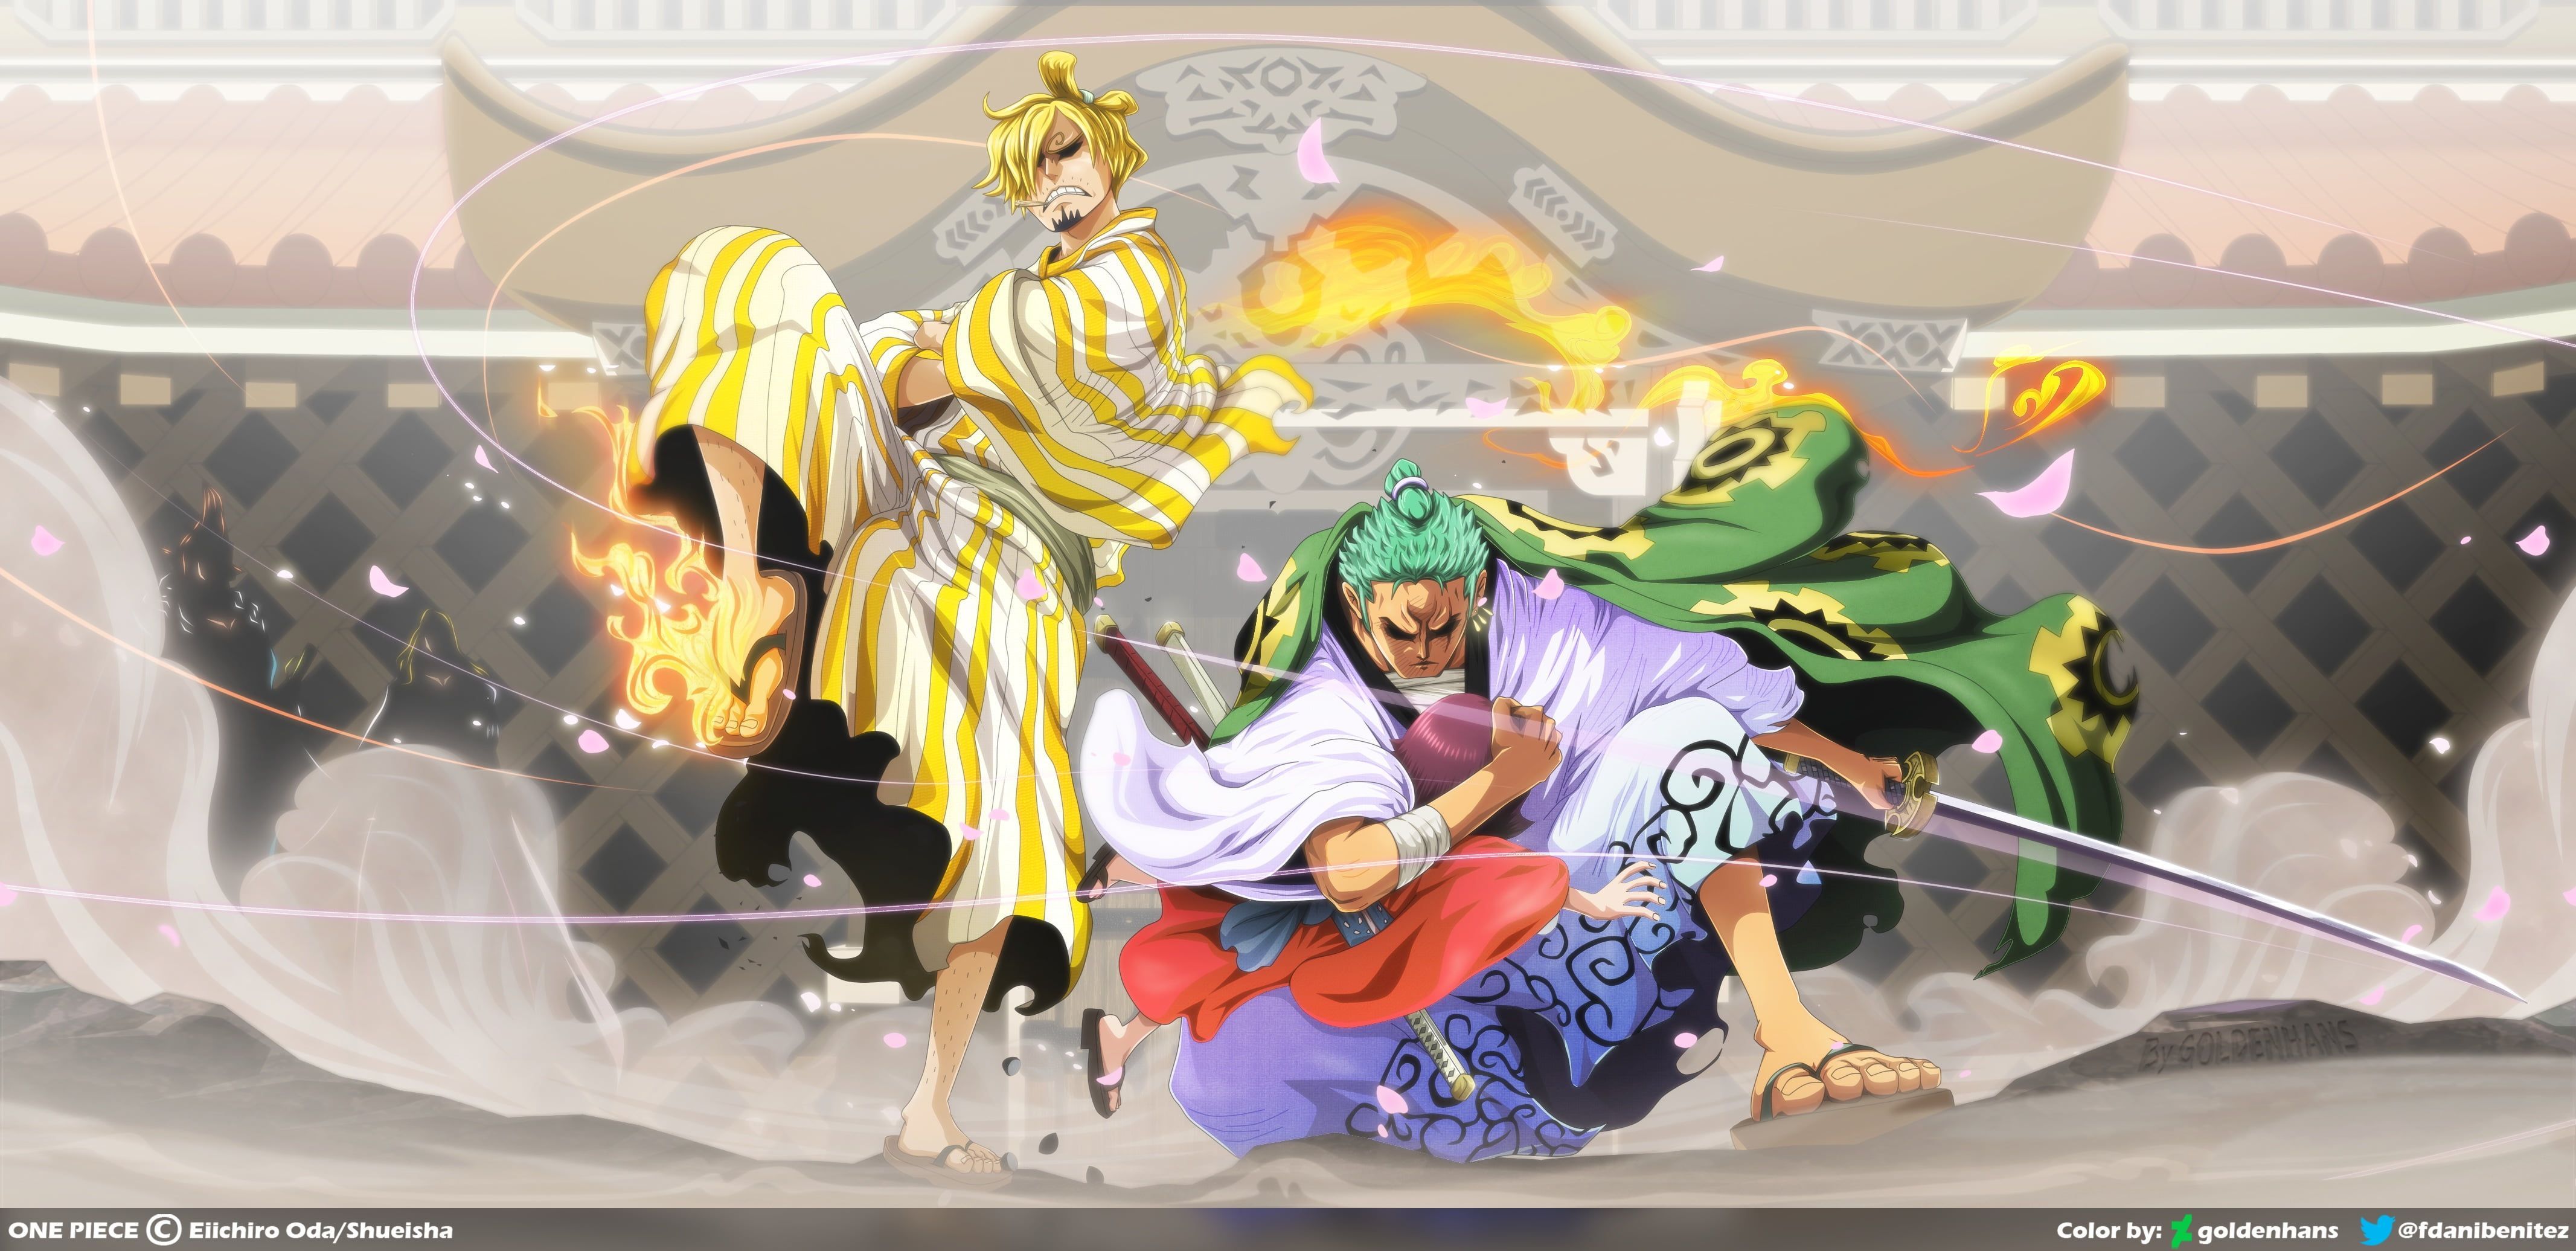 HD wallpaper: One Piece, Roronoa Zoro, Sanji (One Piece), Toko (One Piece) 4K of Wallpaper for Andriod